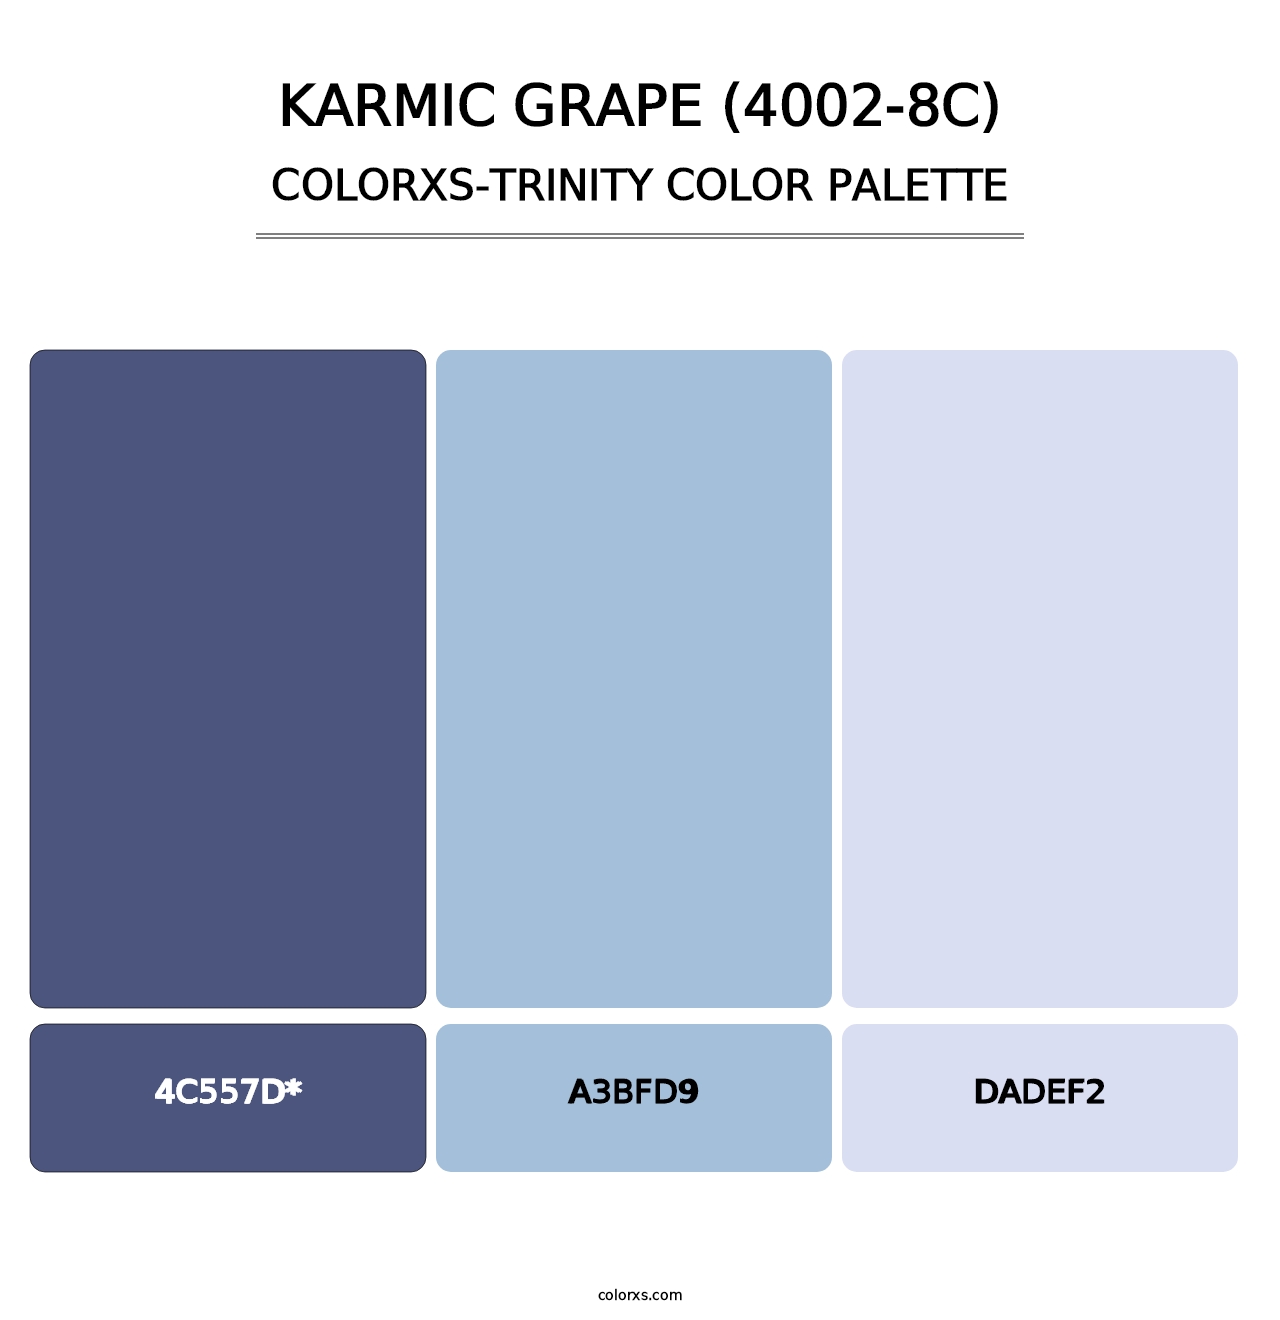 Karmic Grape (4002-8C) - Colorxs Trinity Palette